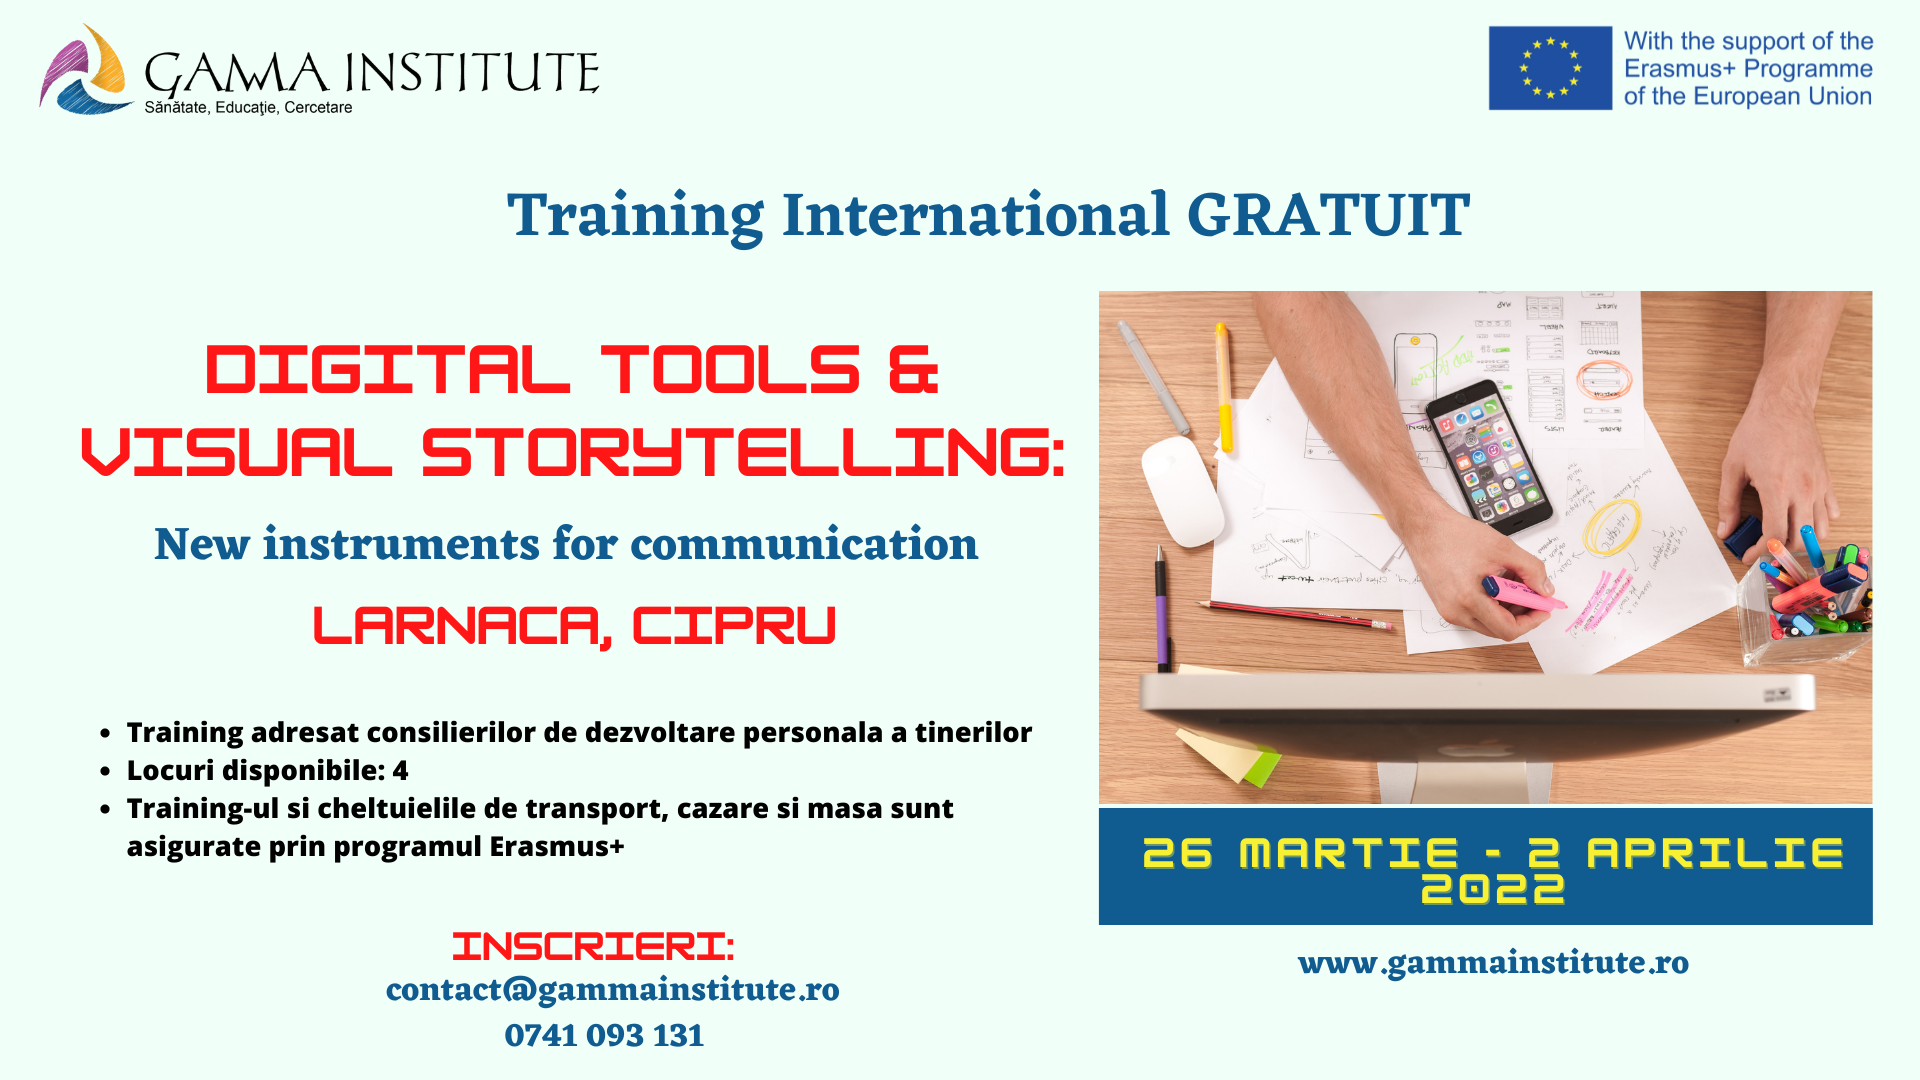 digital_tools_training_international_gratuit_1.png